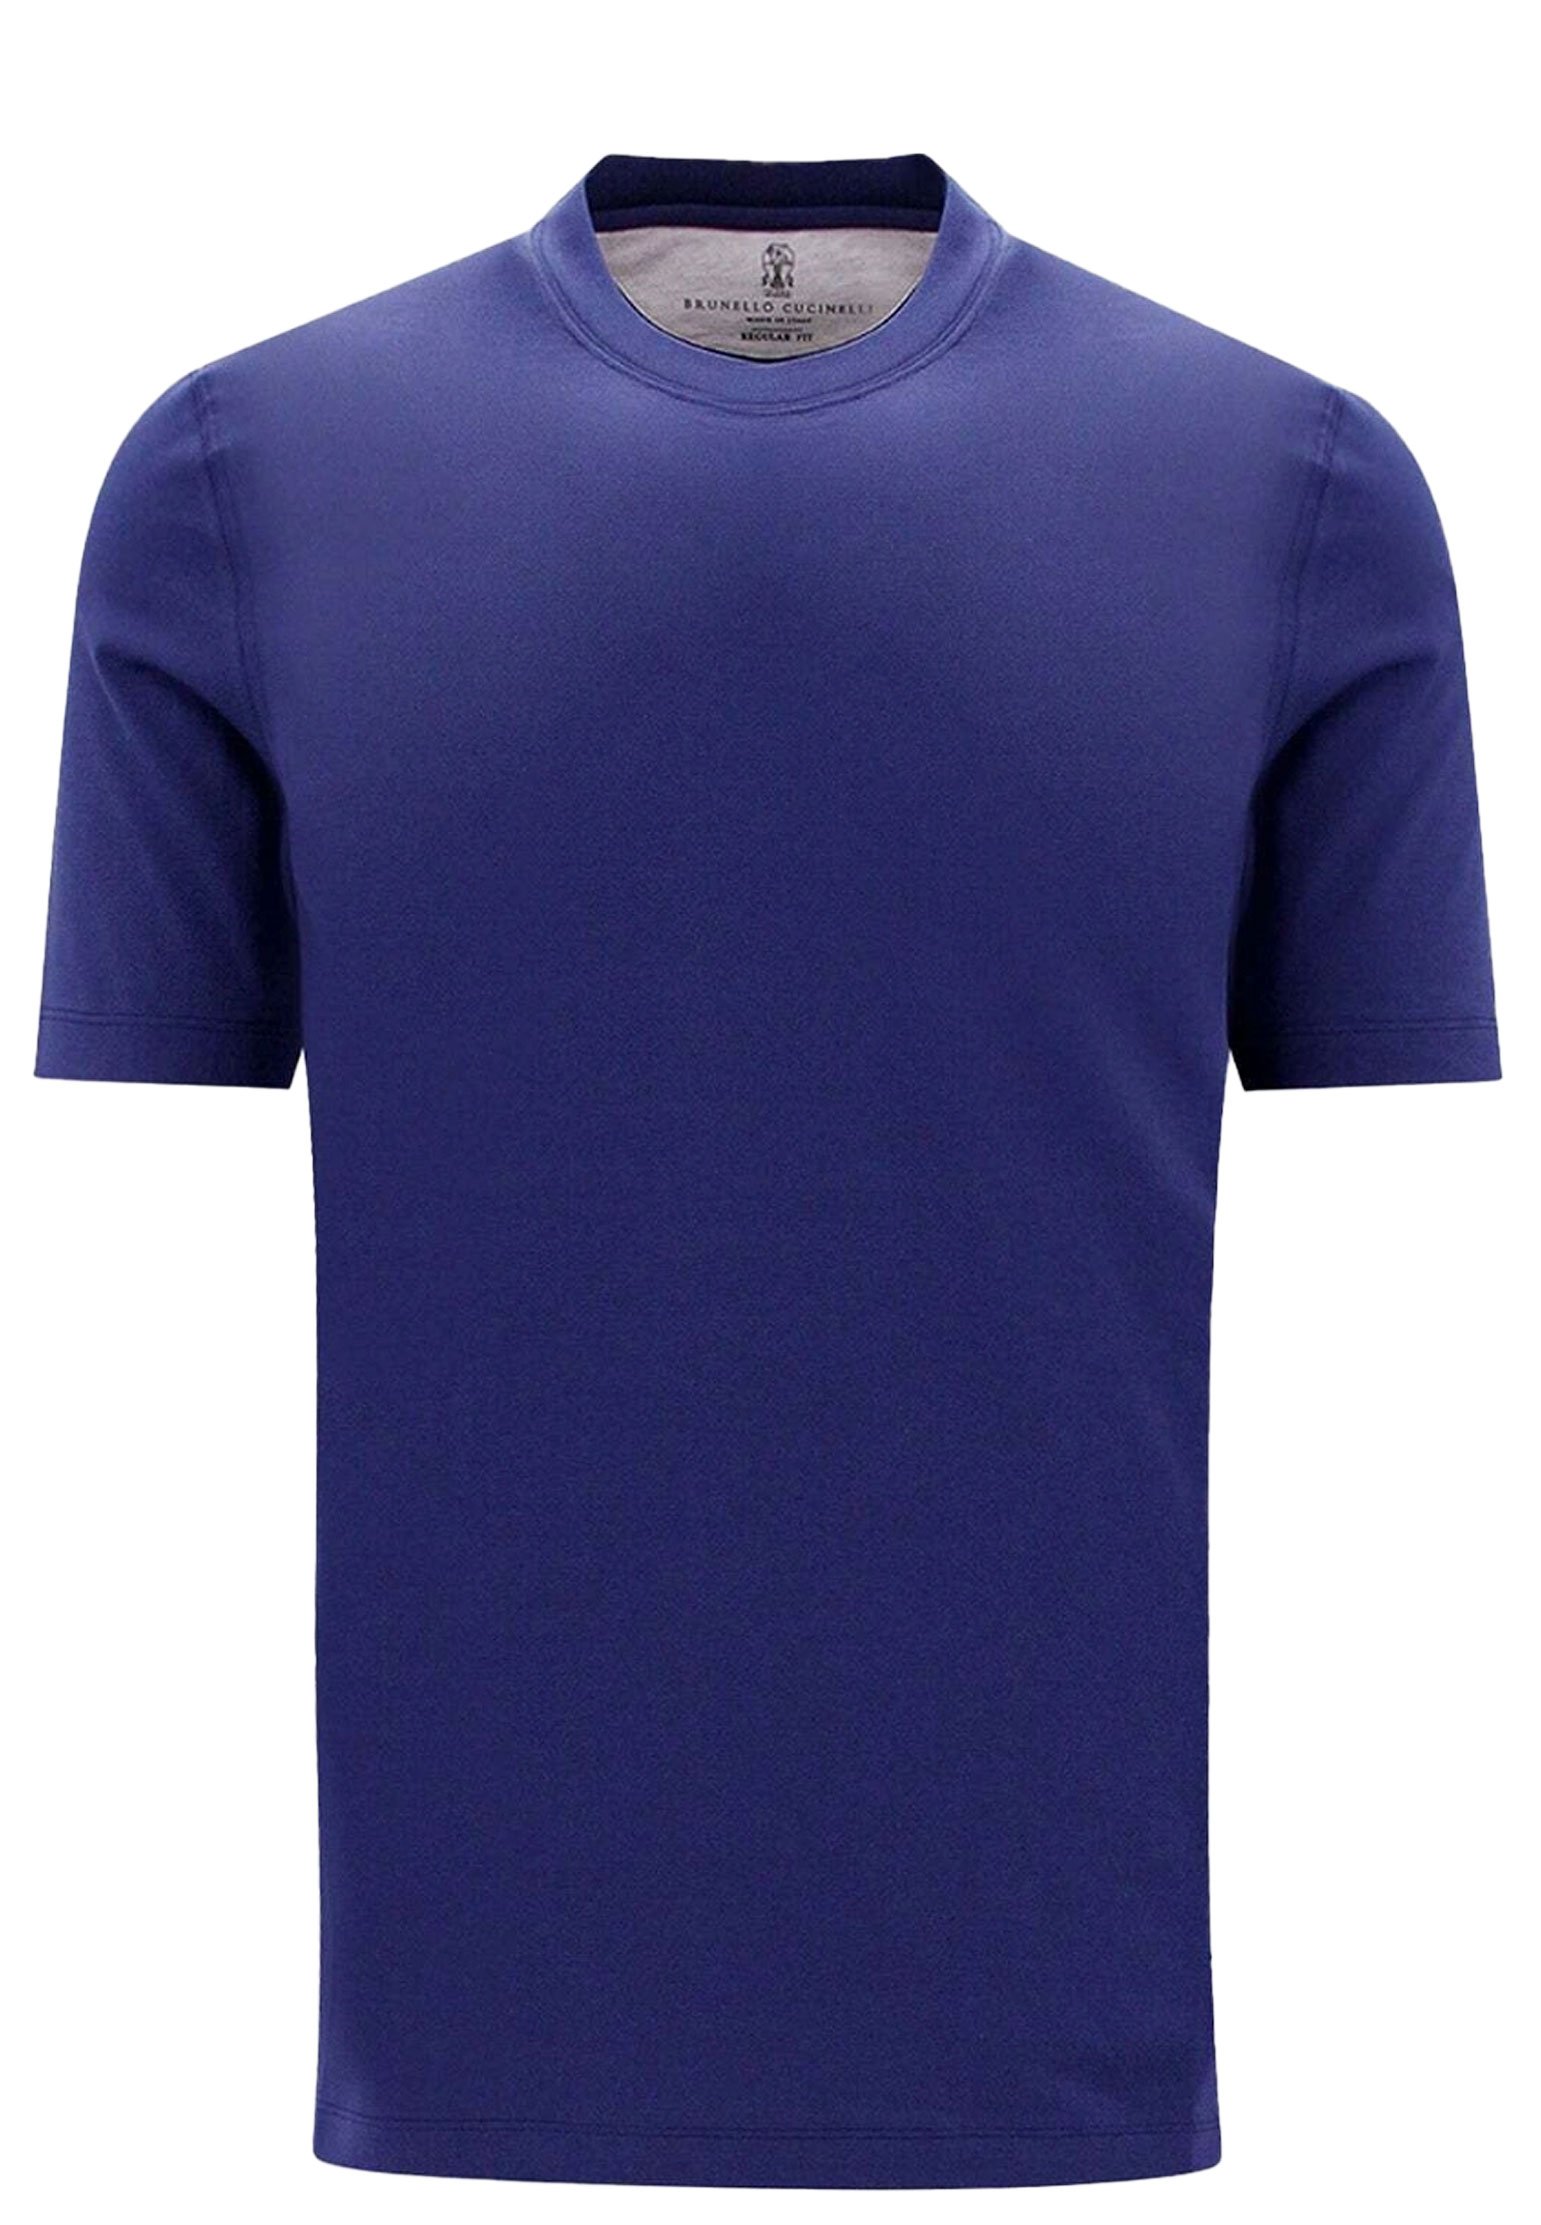 T BRUNELLO CUCINELLI Color: blue (Code: 1491) in online store Allure